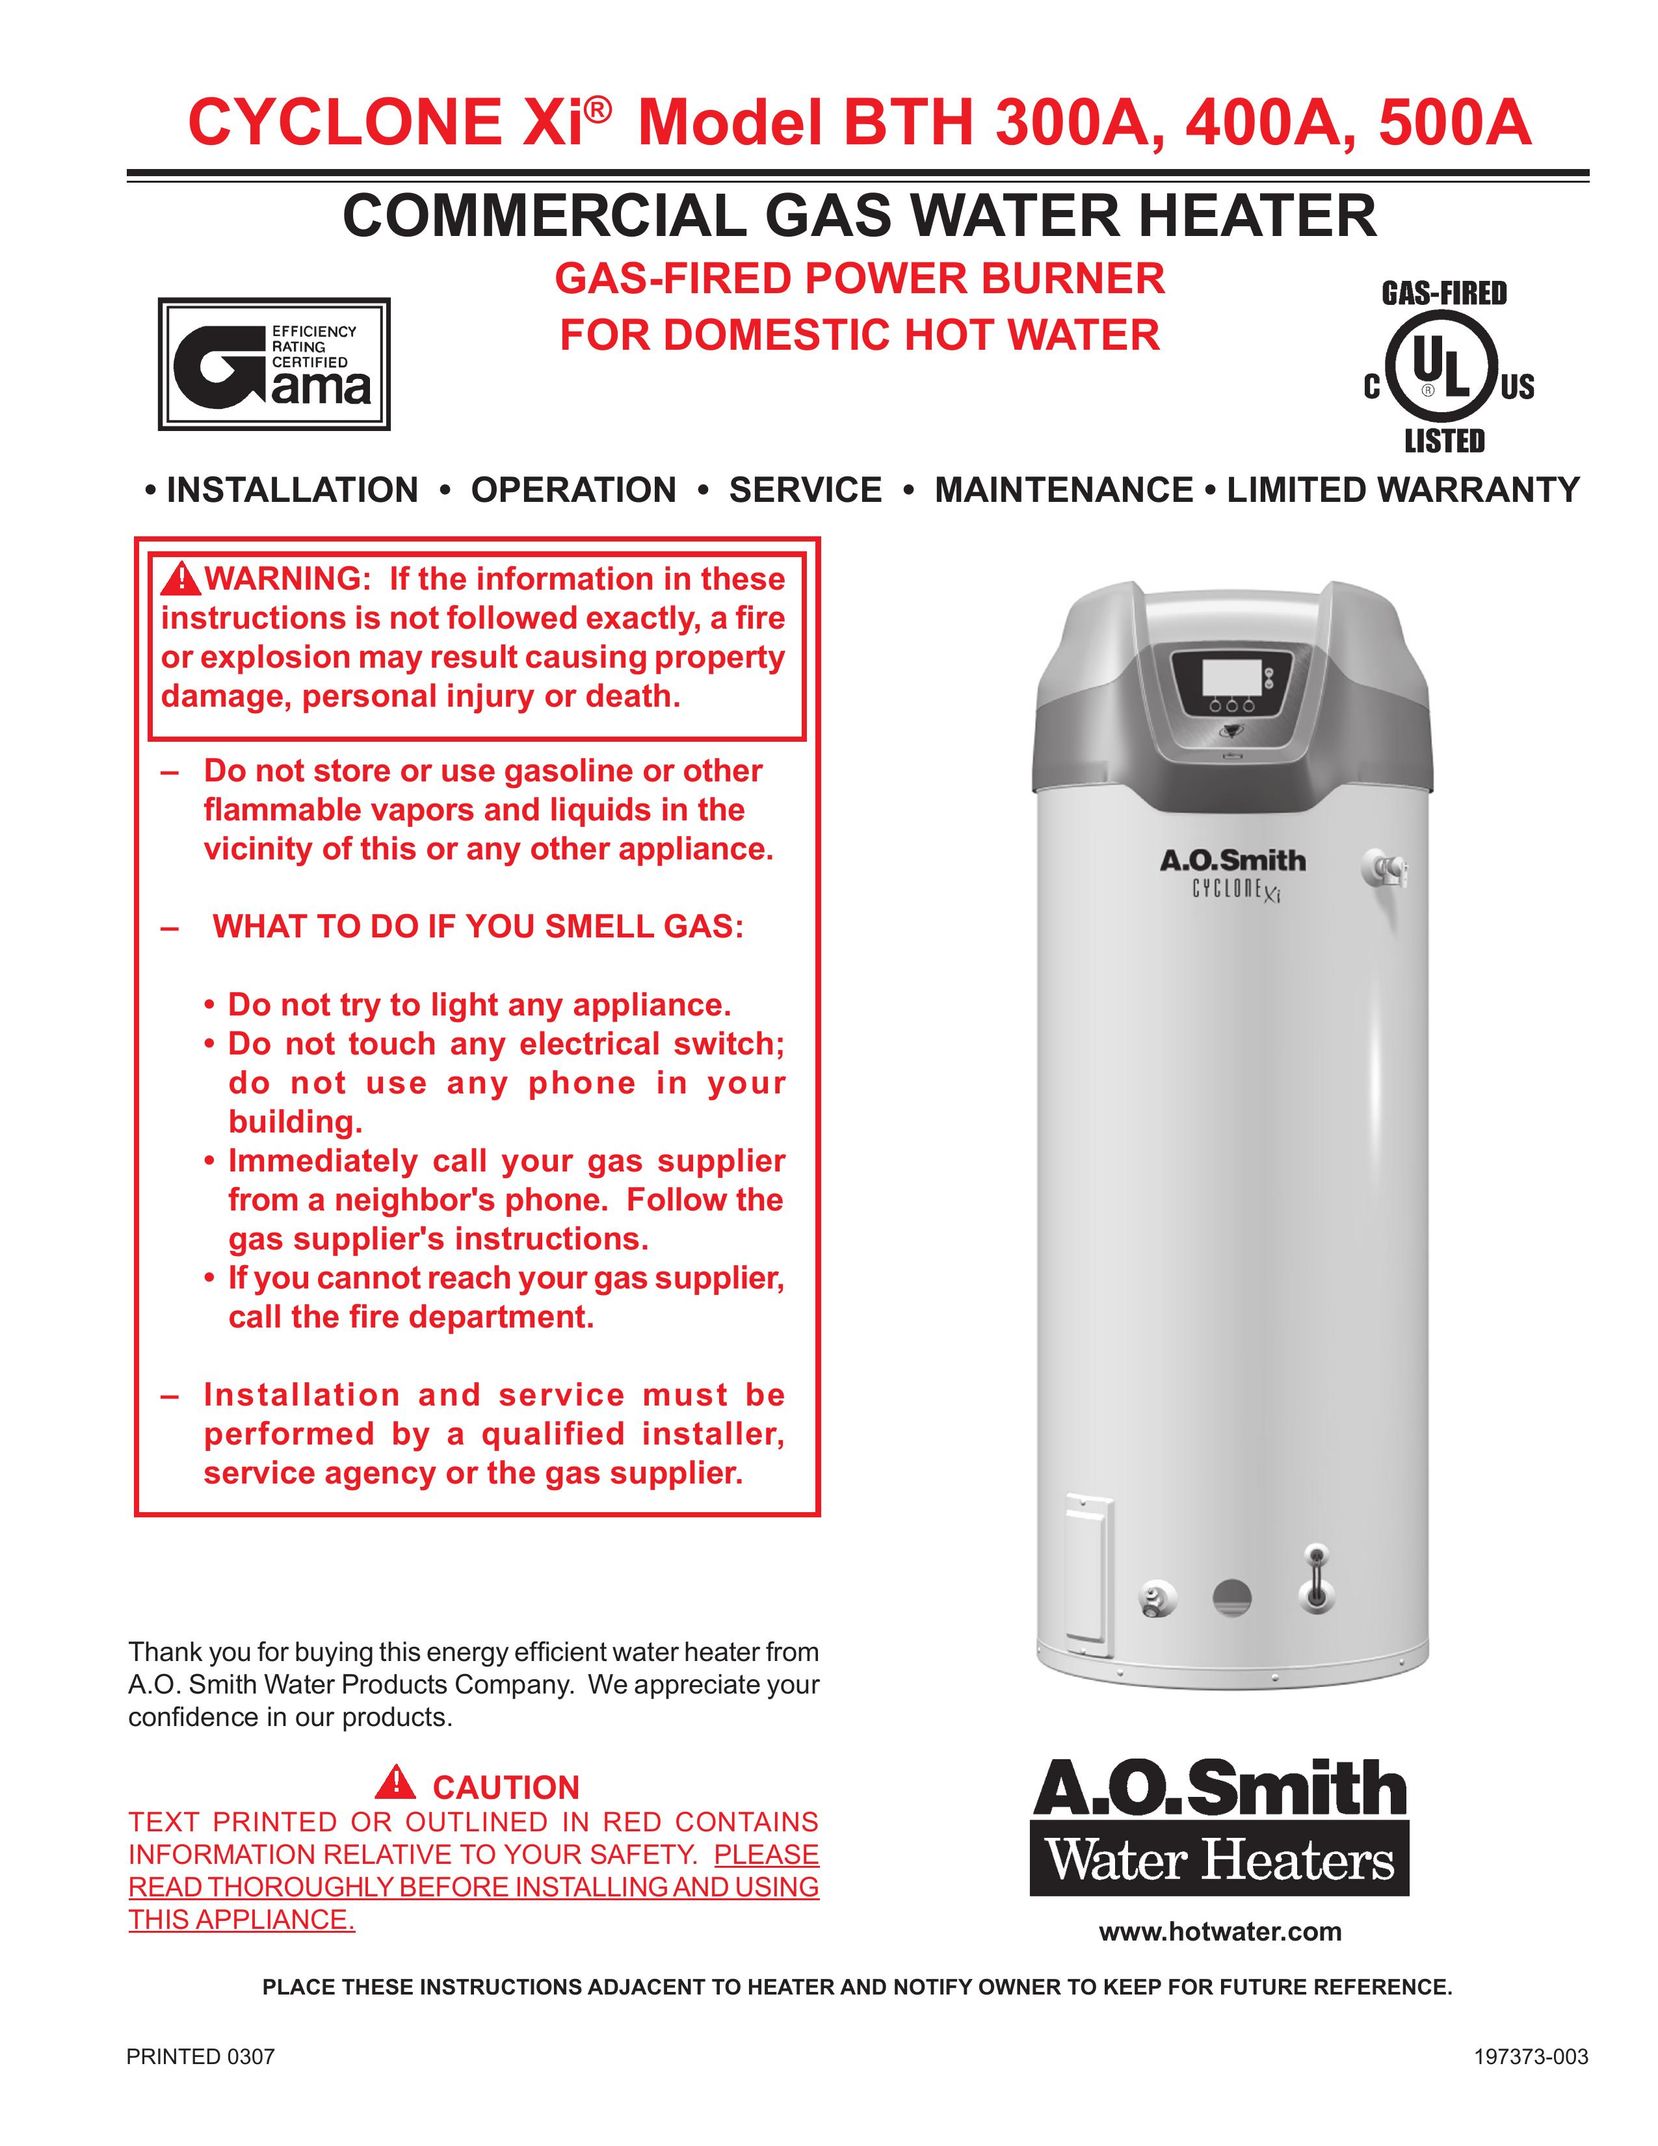 A.O. Smith 300A Water Heater User Manual